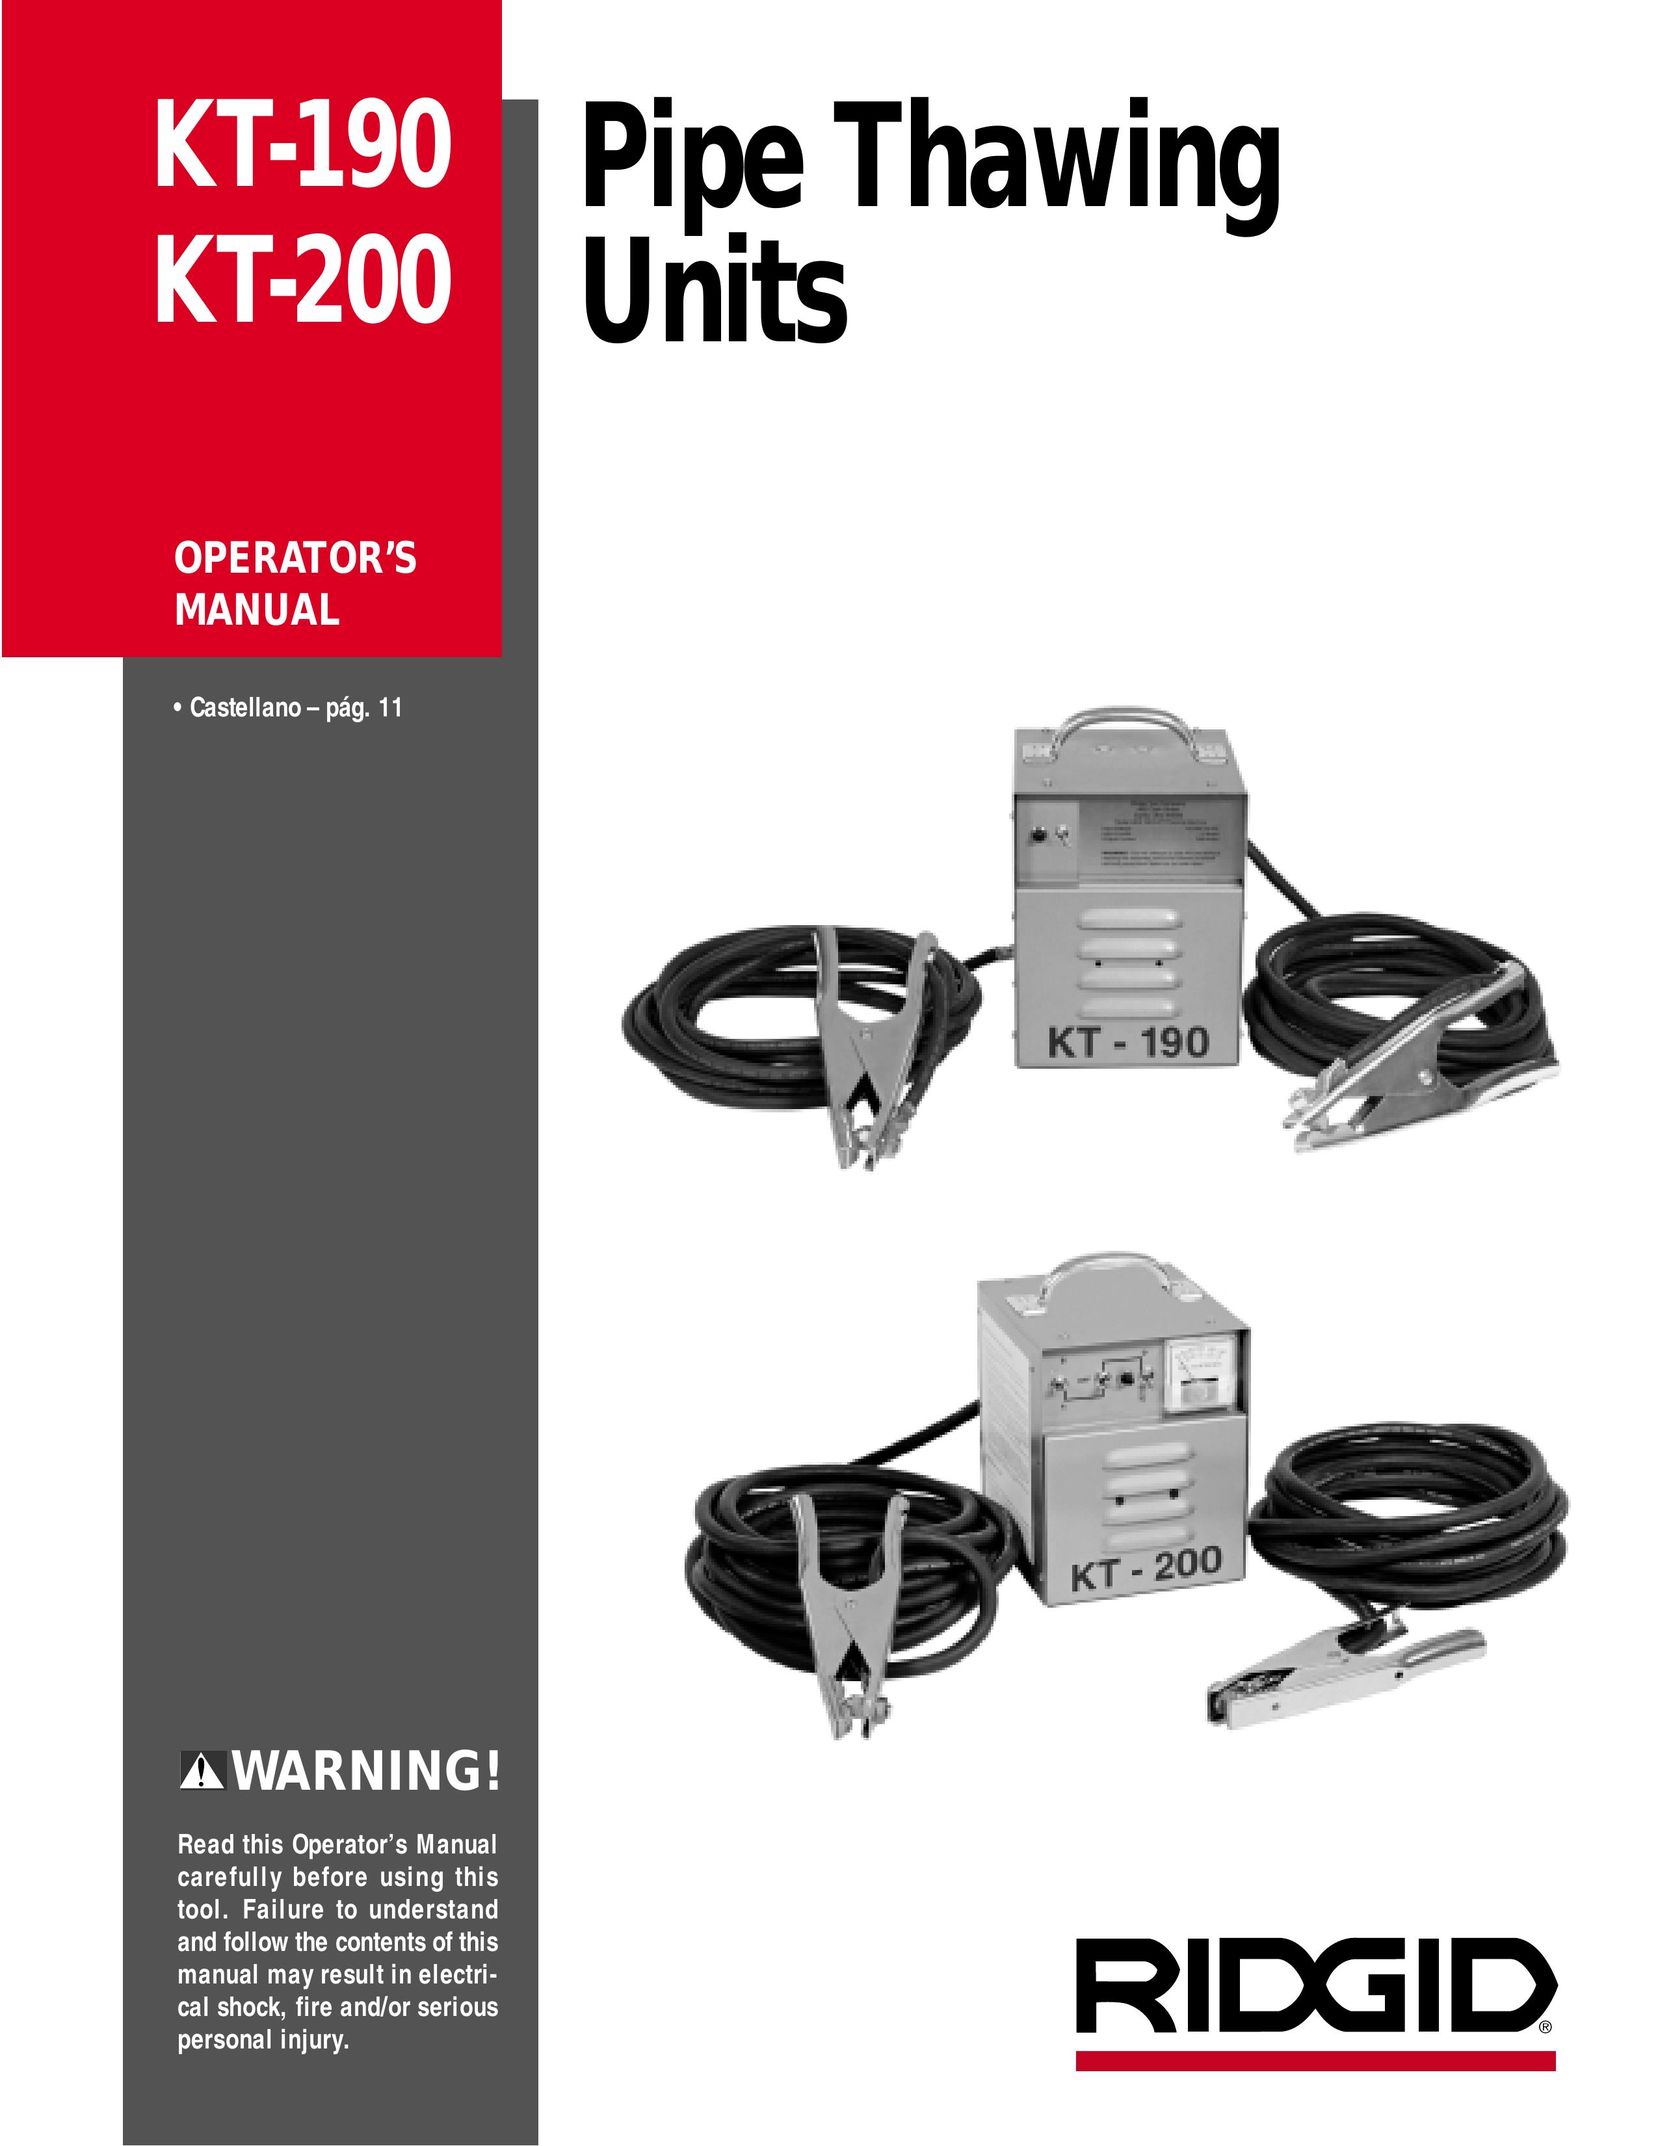 RIDGID kt-190 Welder User Manual